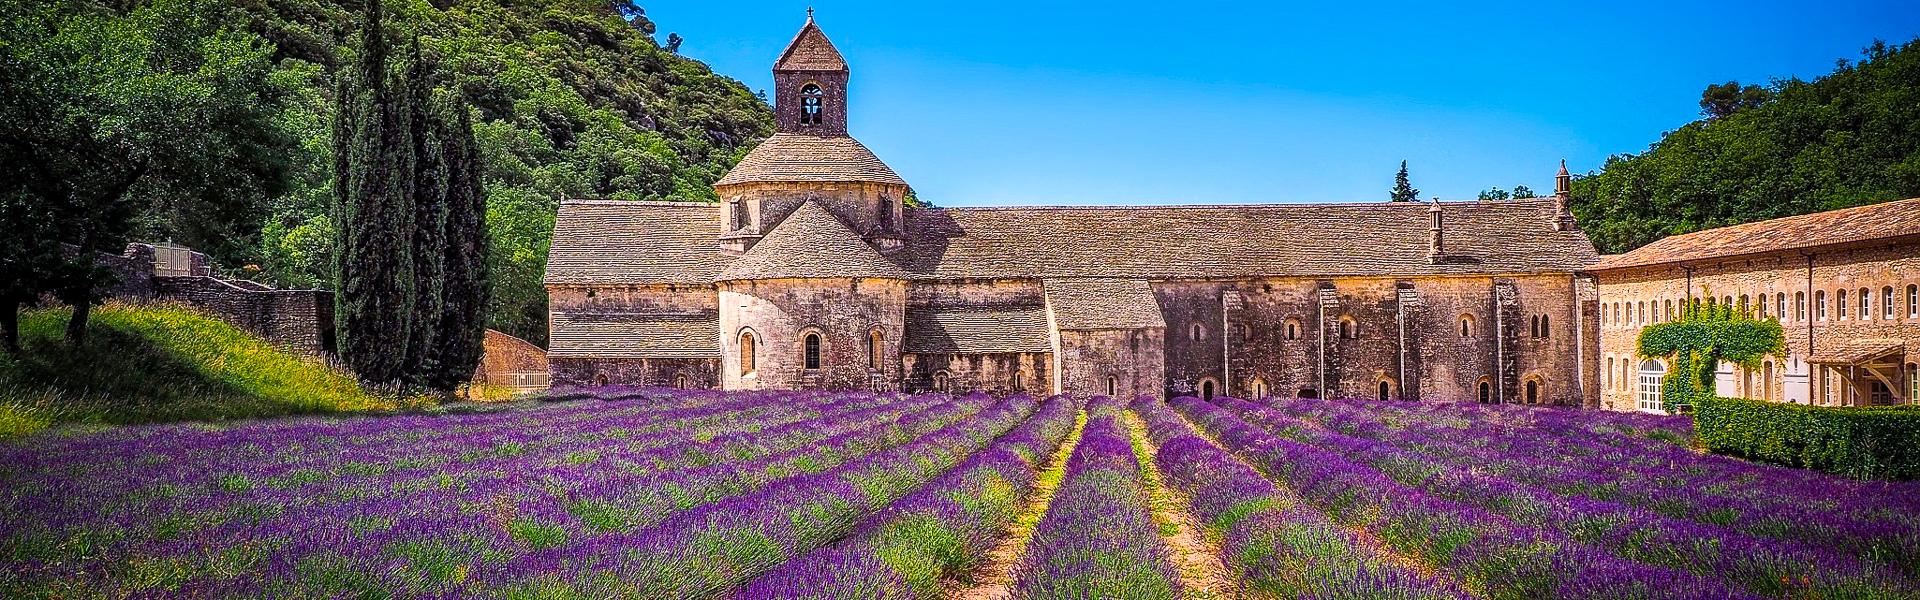 Lavendelfeld vor der Abbaye de Snanque |  Walkerssk, Pixabay / Chamleon